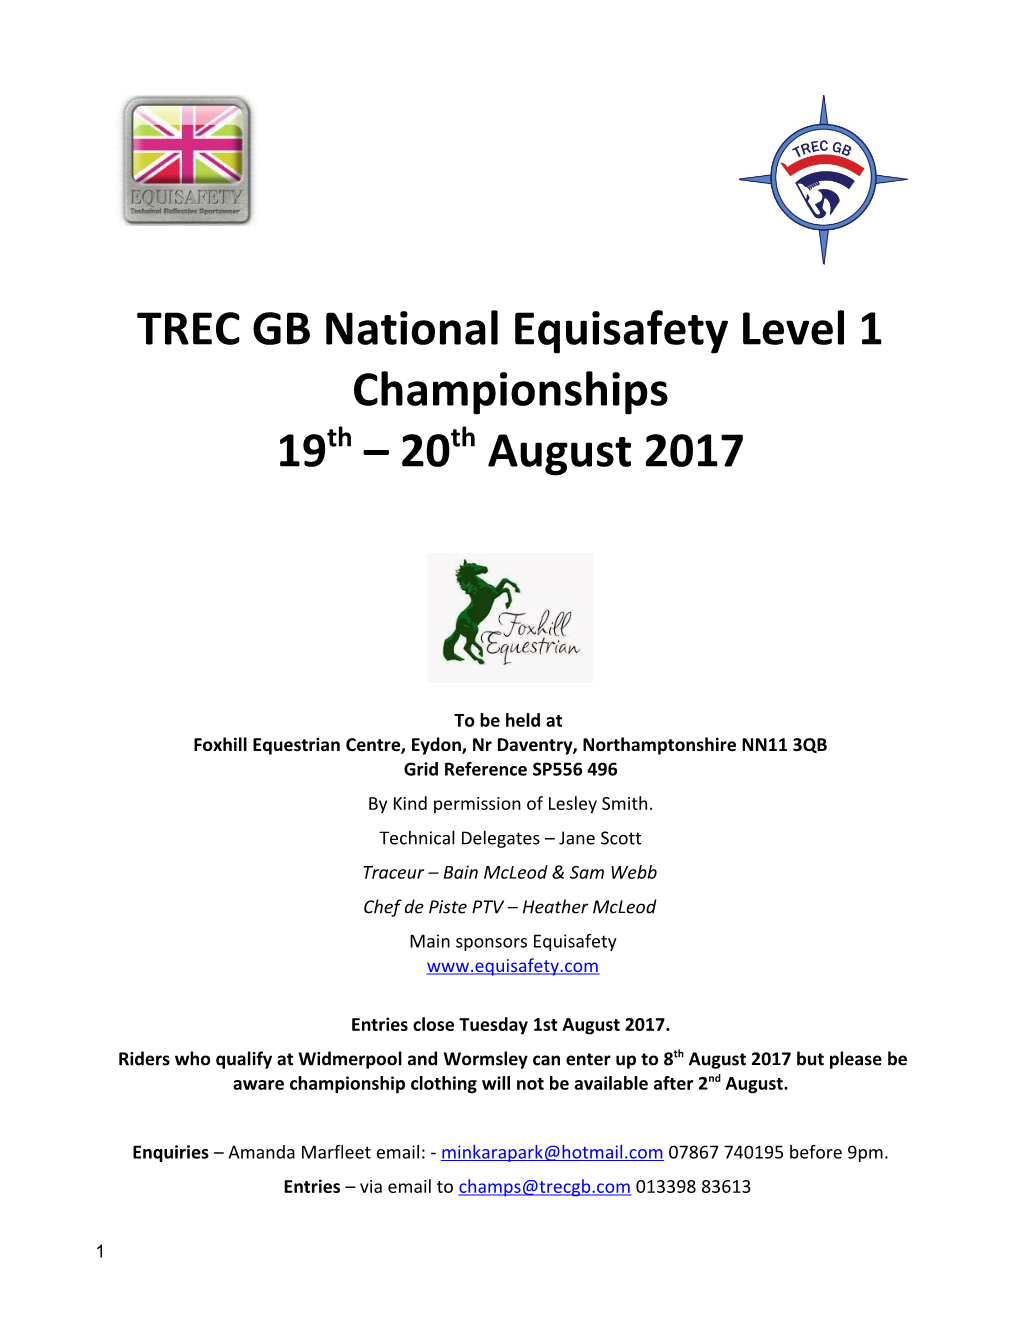 TREC GB National Equisafety Level 1 Championships